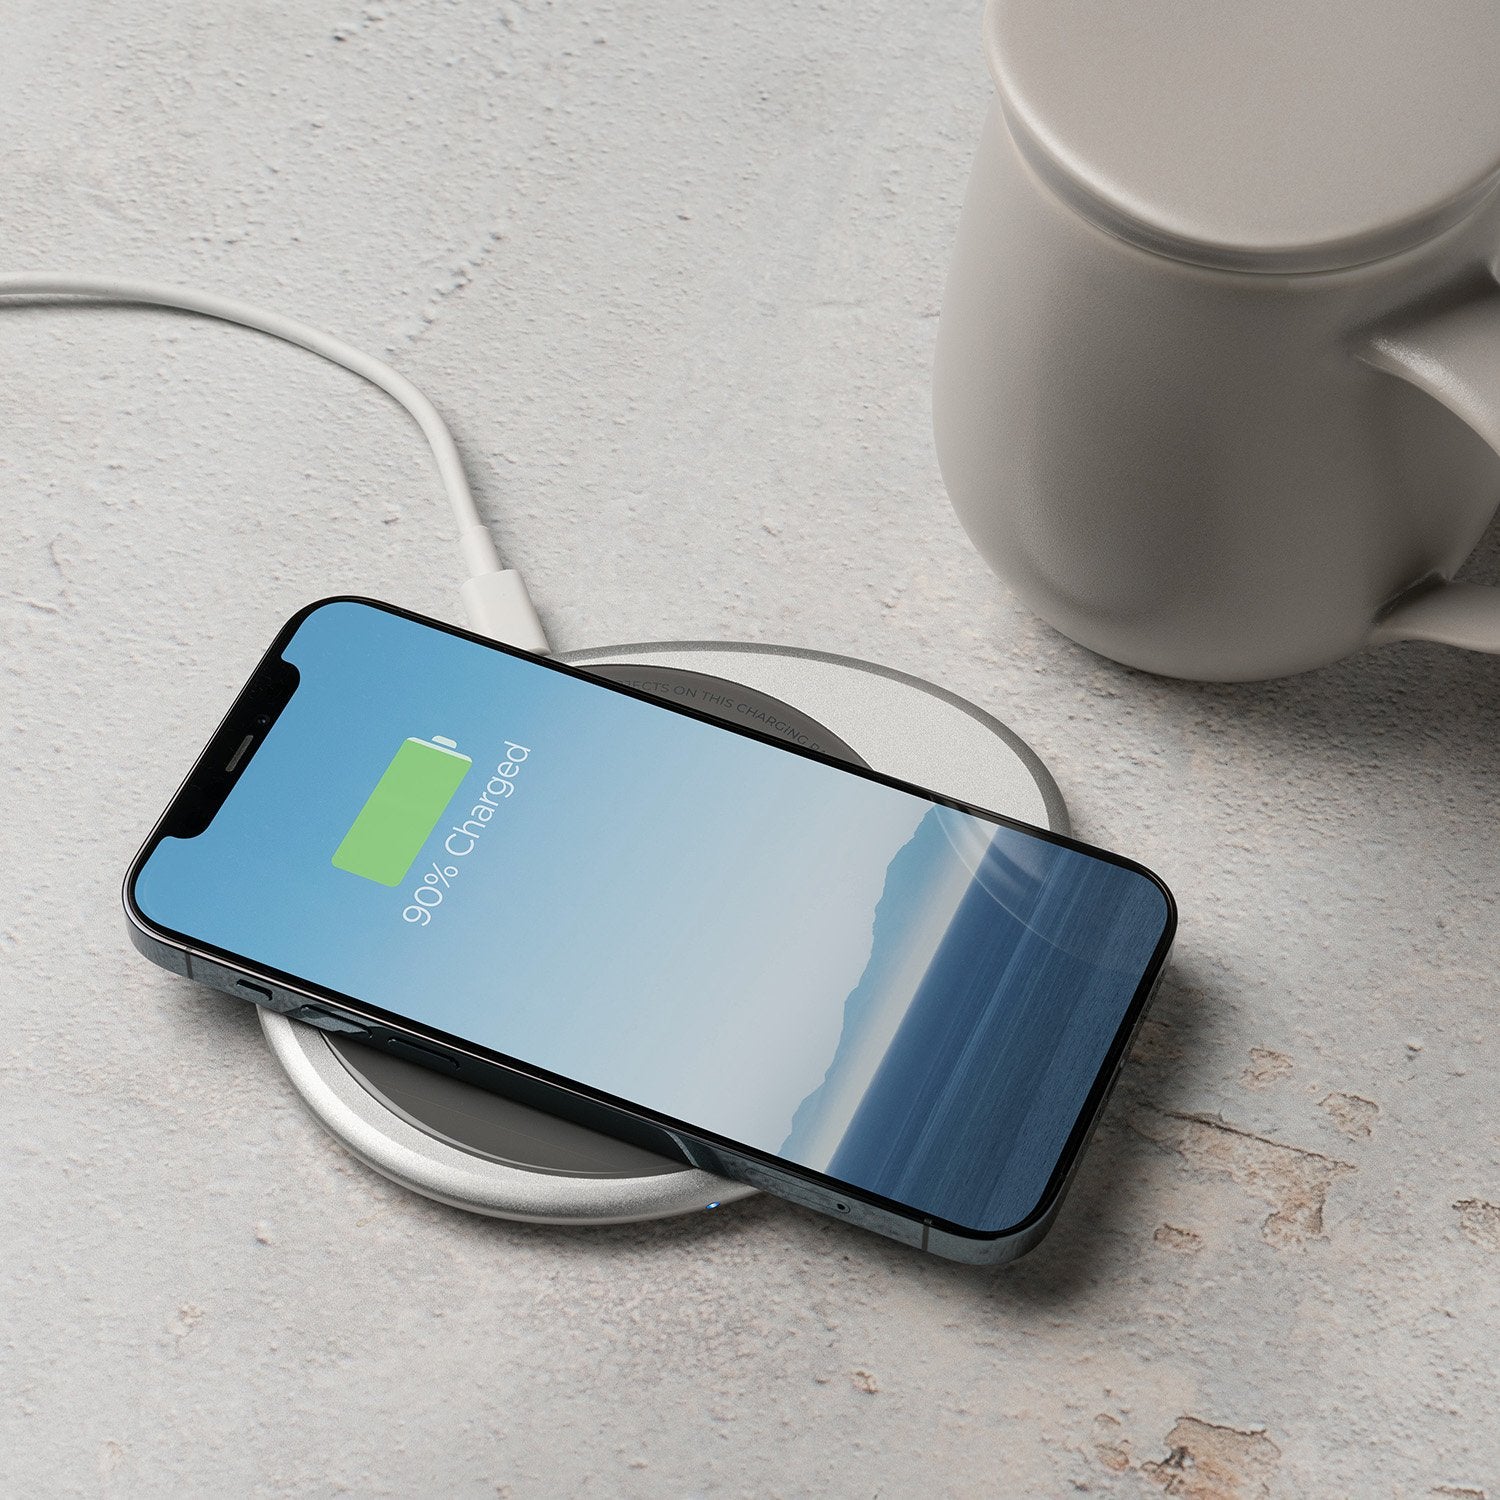 Phone on charging pad next to mug